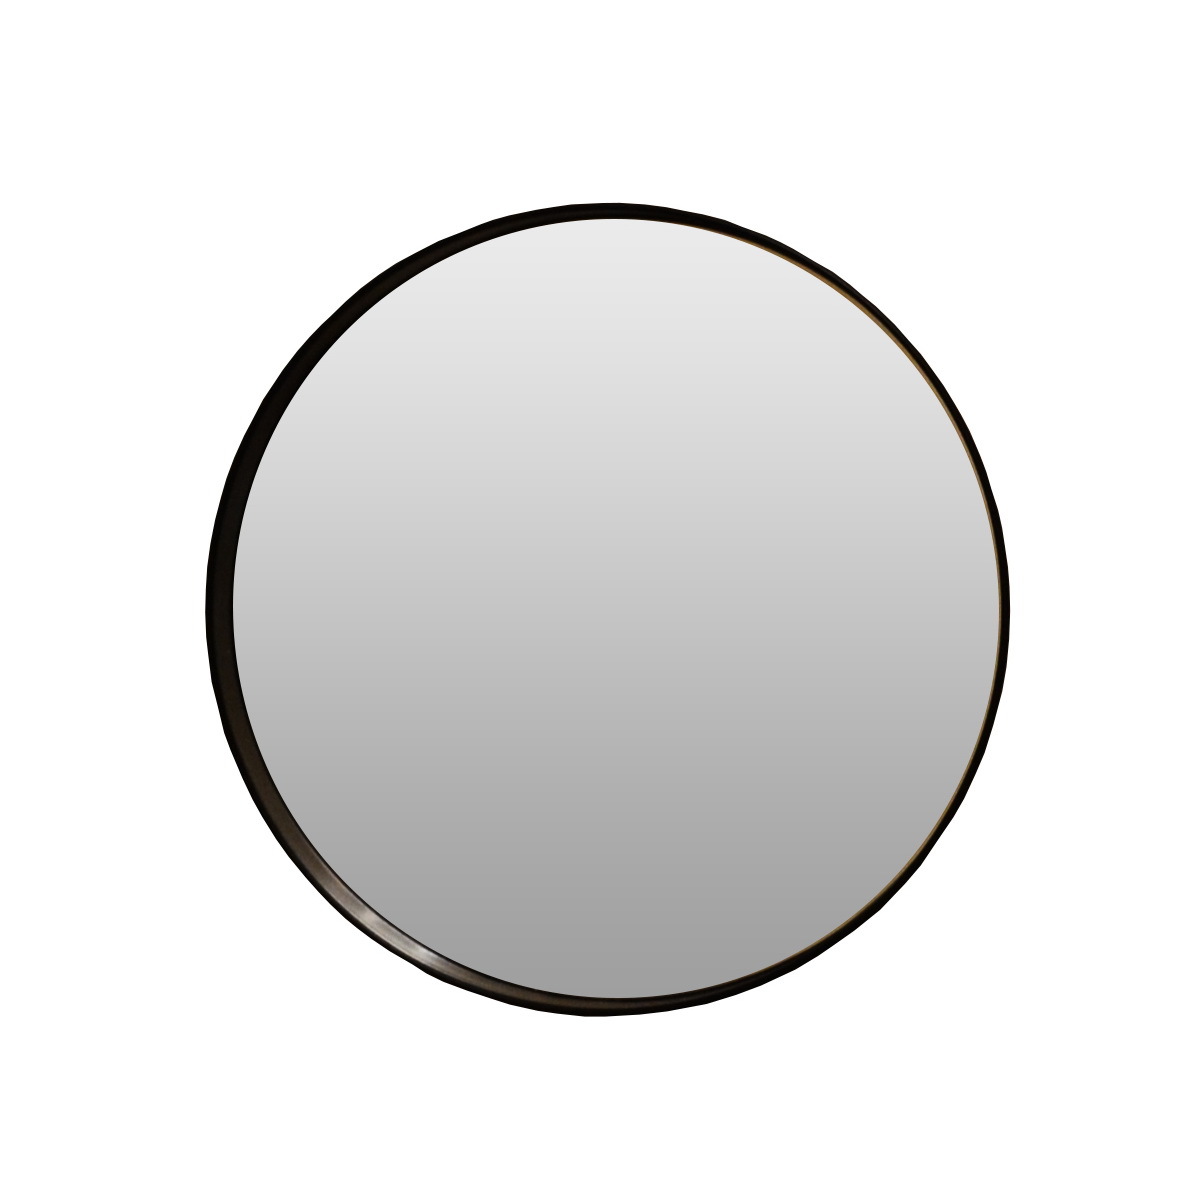 Купить зеркало метр. Круглое зеркало 1 метр в диаметре. Зеркало круглое диаметр 20 см. Круглое зеркало 30 см диаметр. Зеркало диаметр 110 см.